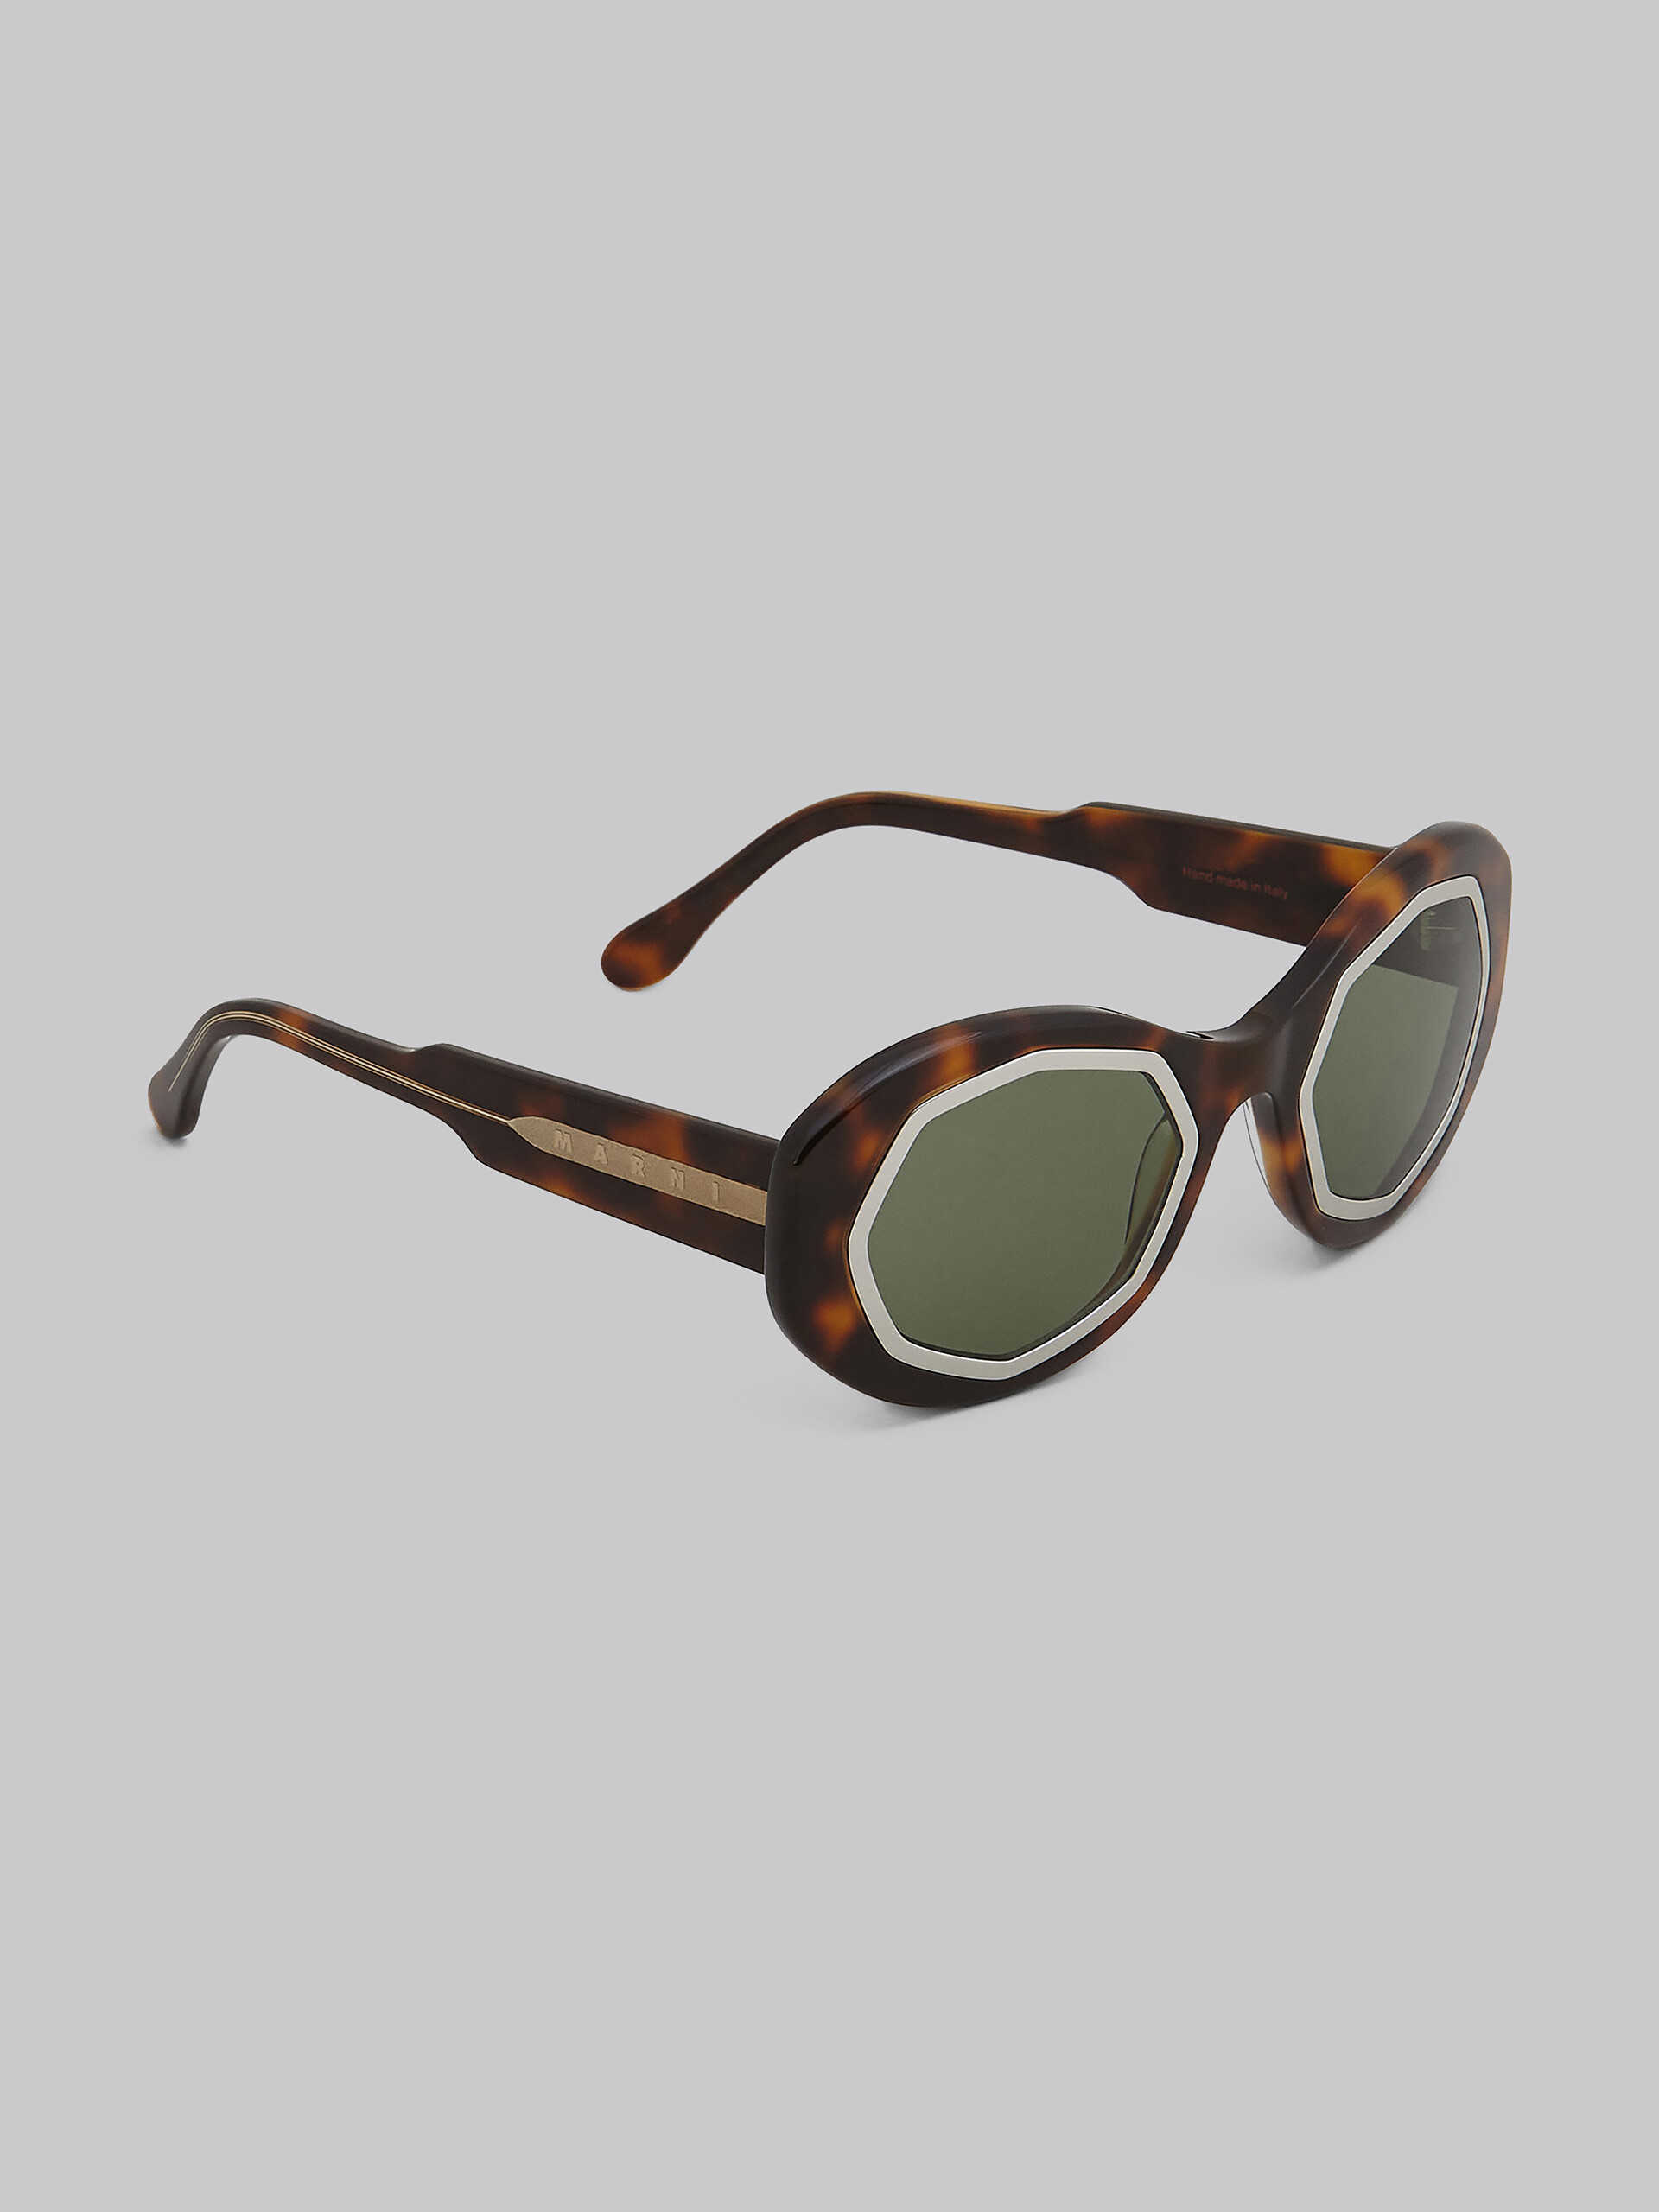 Tortoiseshell MOUNT BRUMO acetate sunglasses - Optical - Image 2